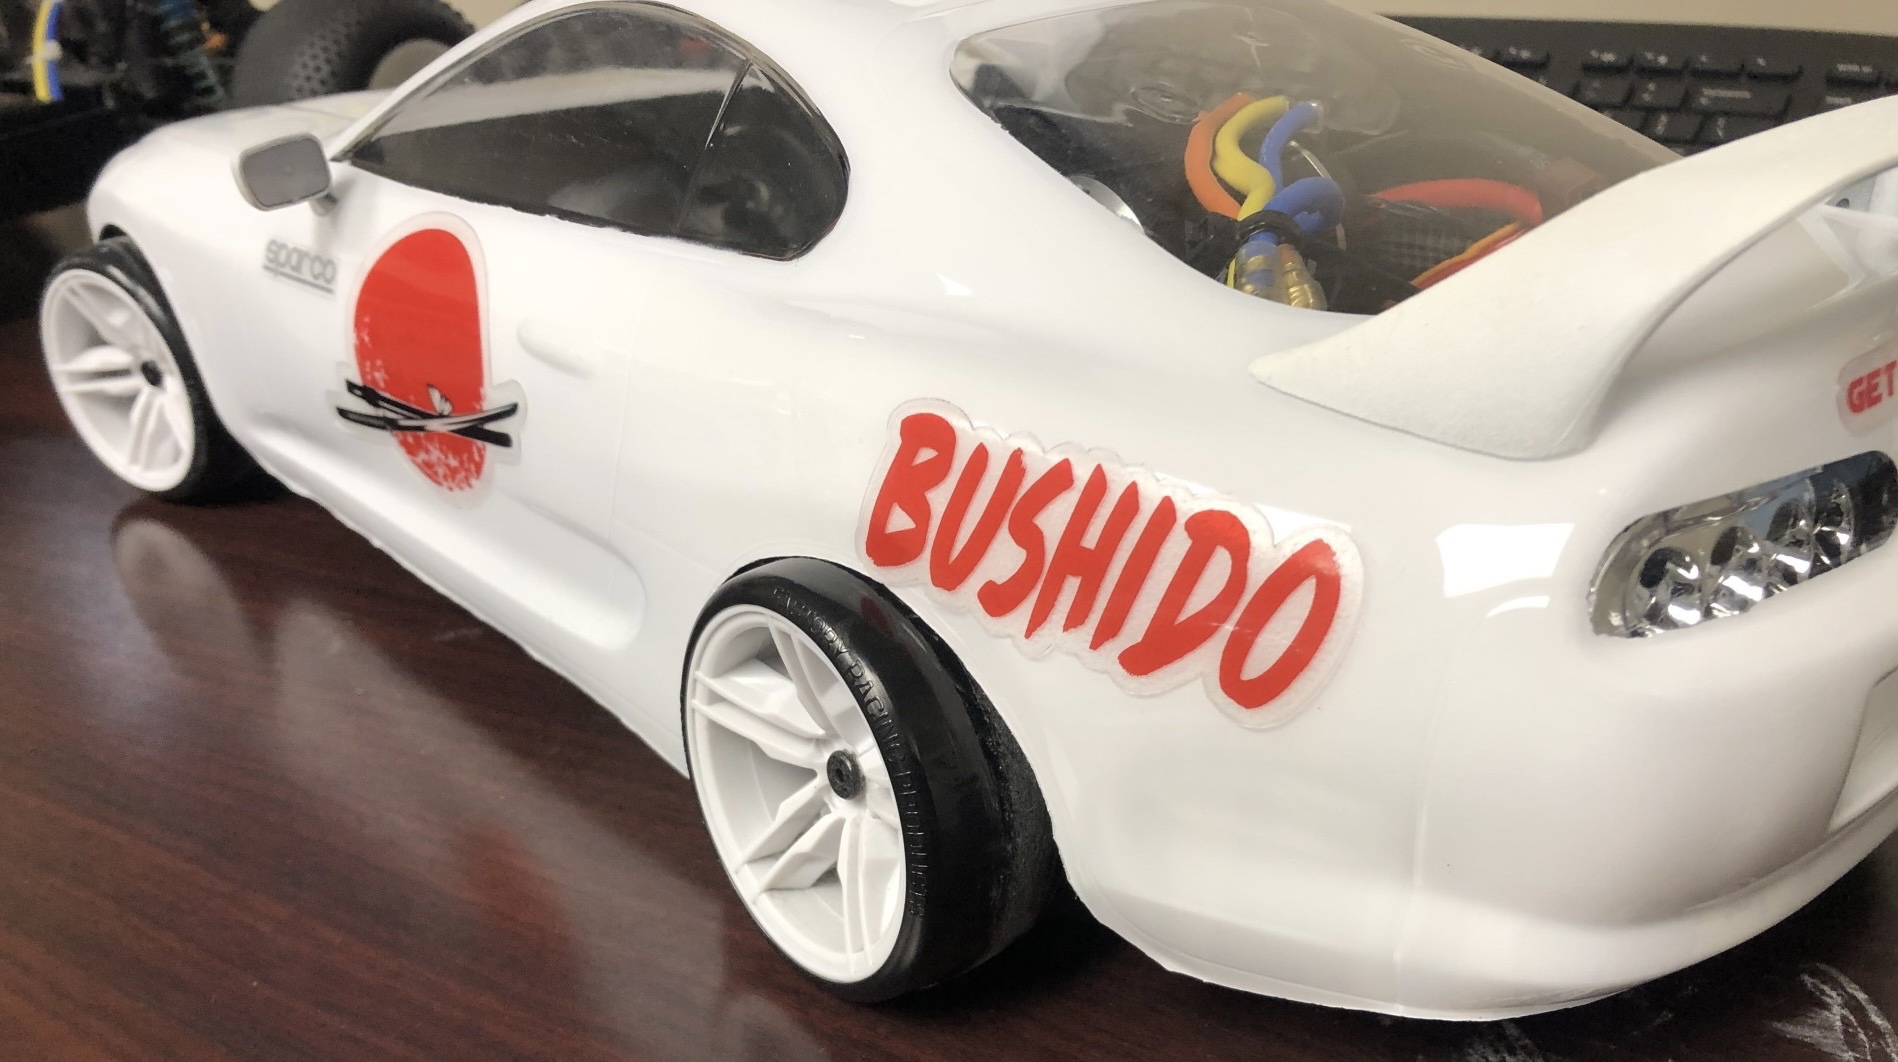 BUSHIDO : Drift and Race no Steam